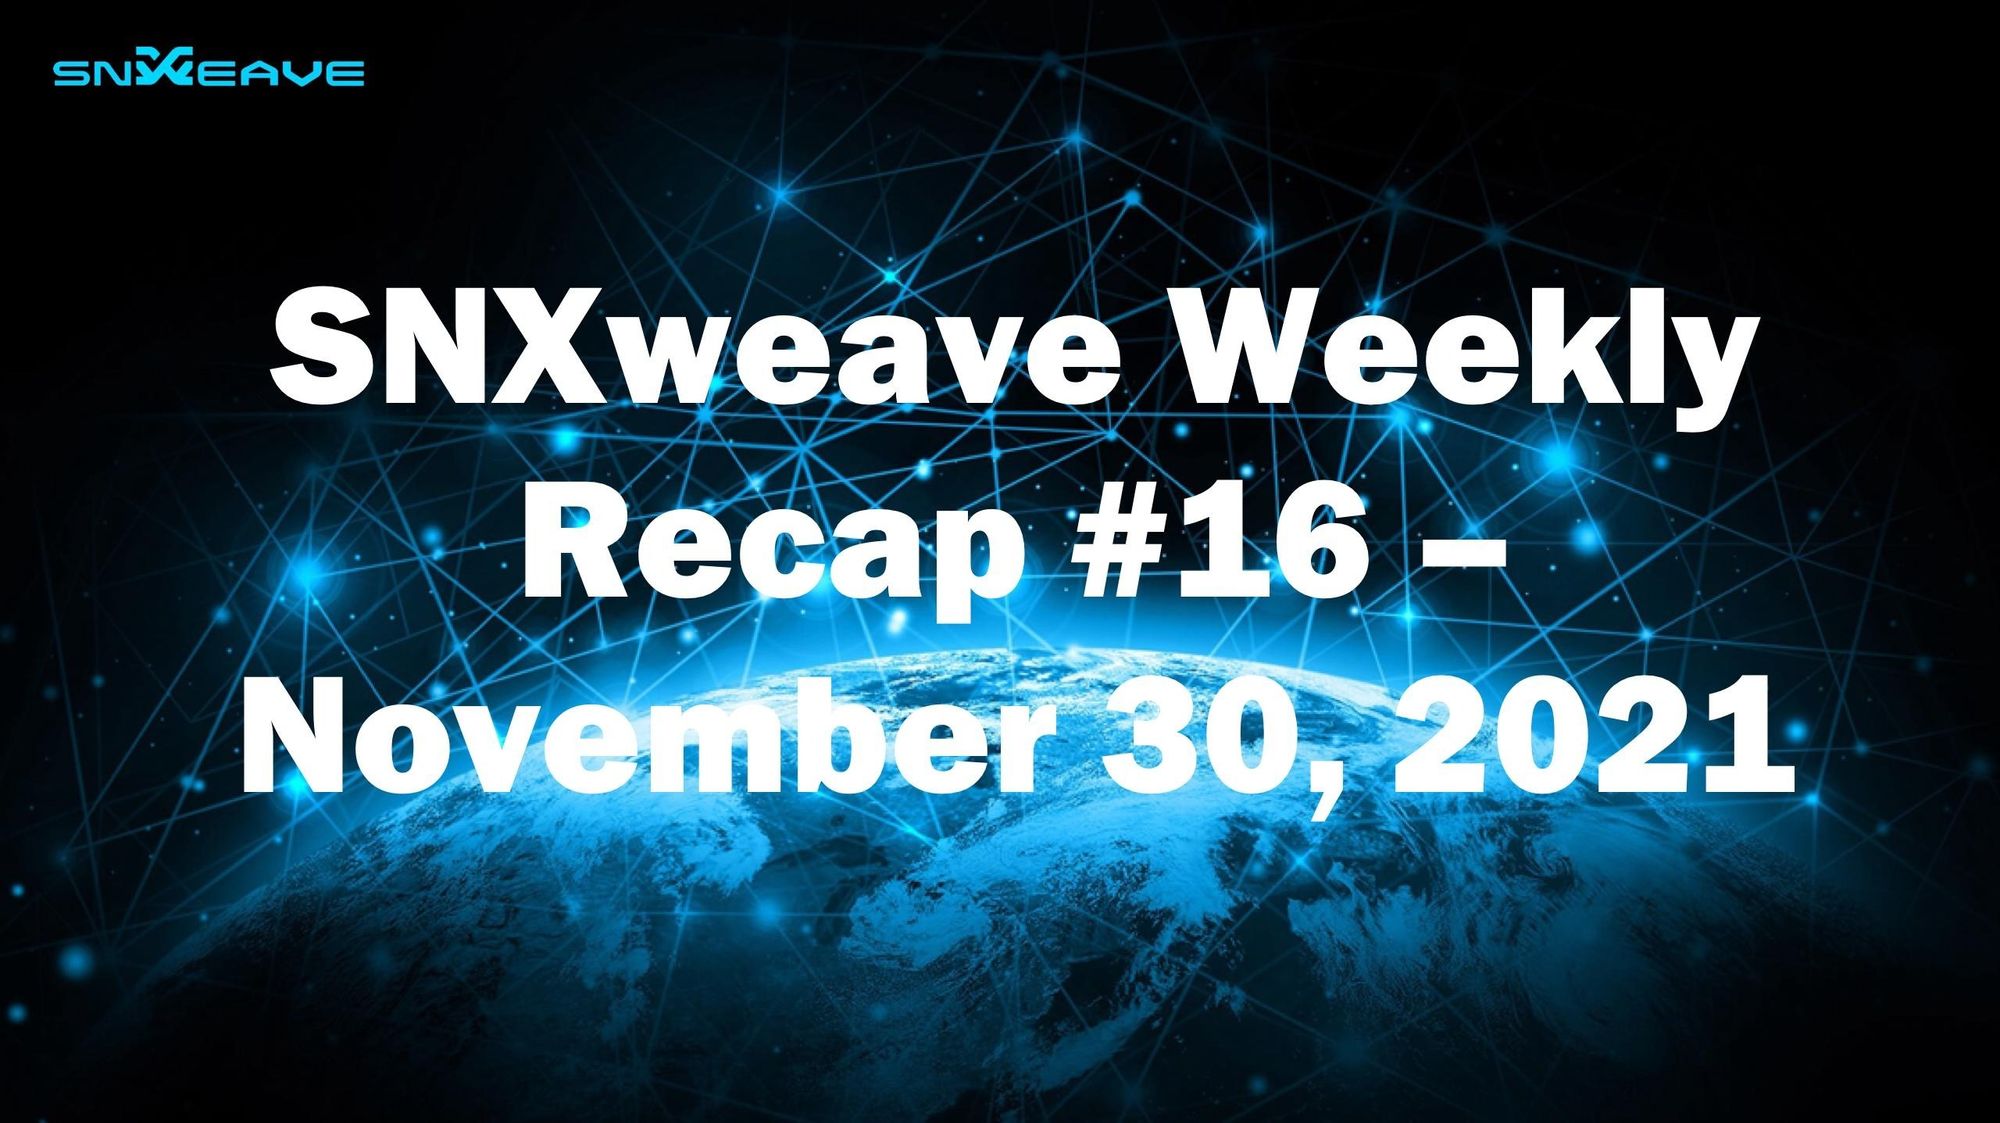 SNXweave Weekly Recap 16